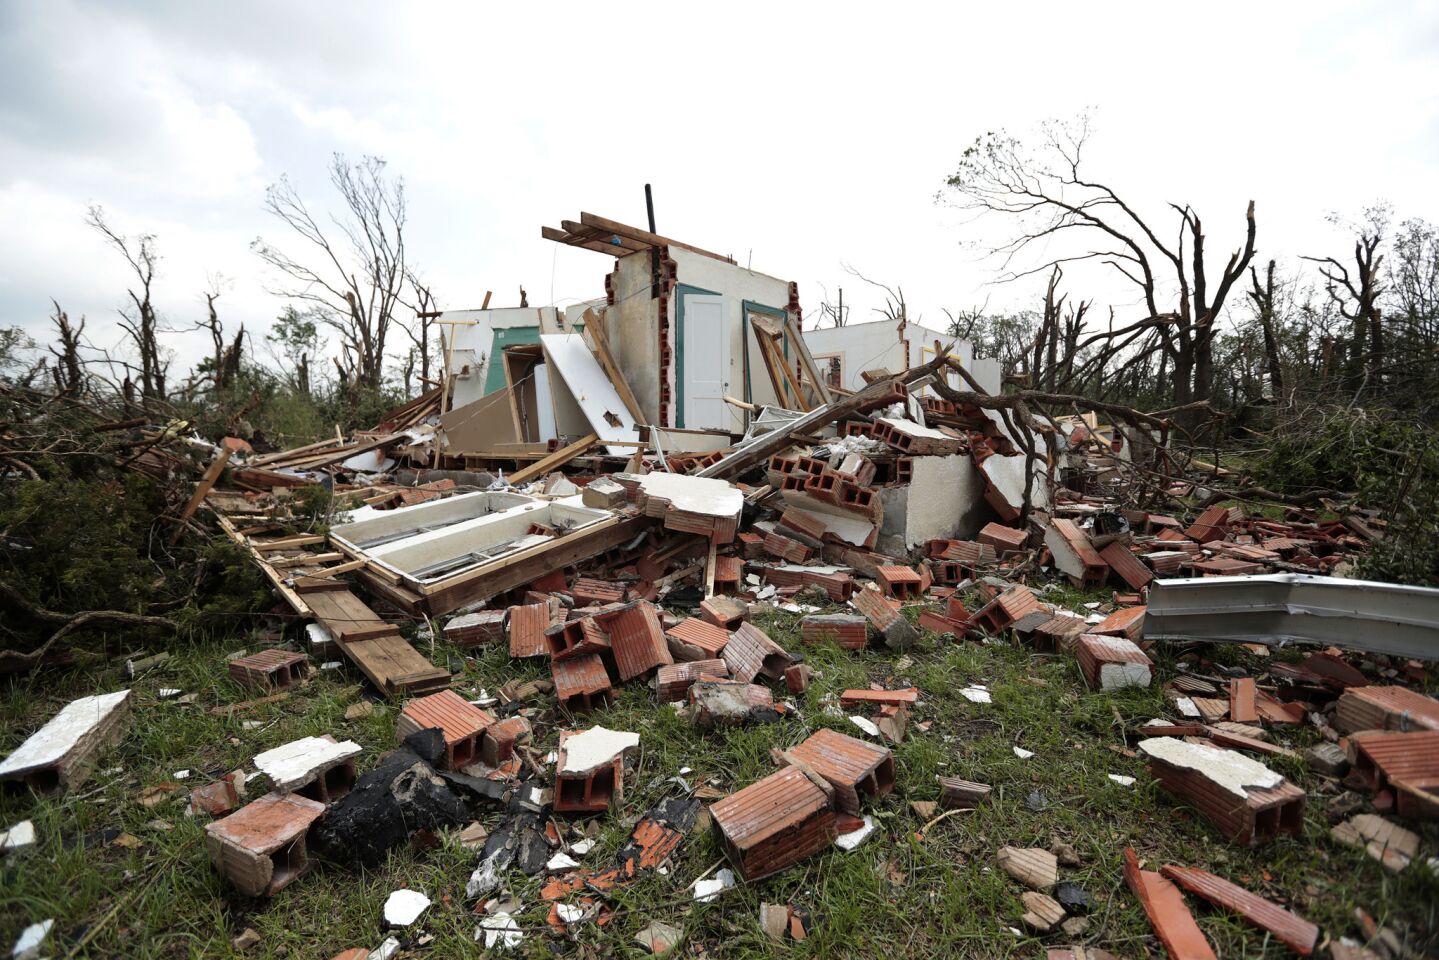 A home sits damaged after a tornado moved through an area ear Shawnee, Okla.